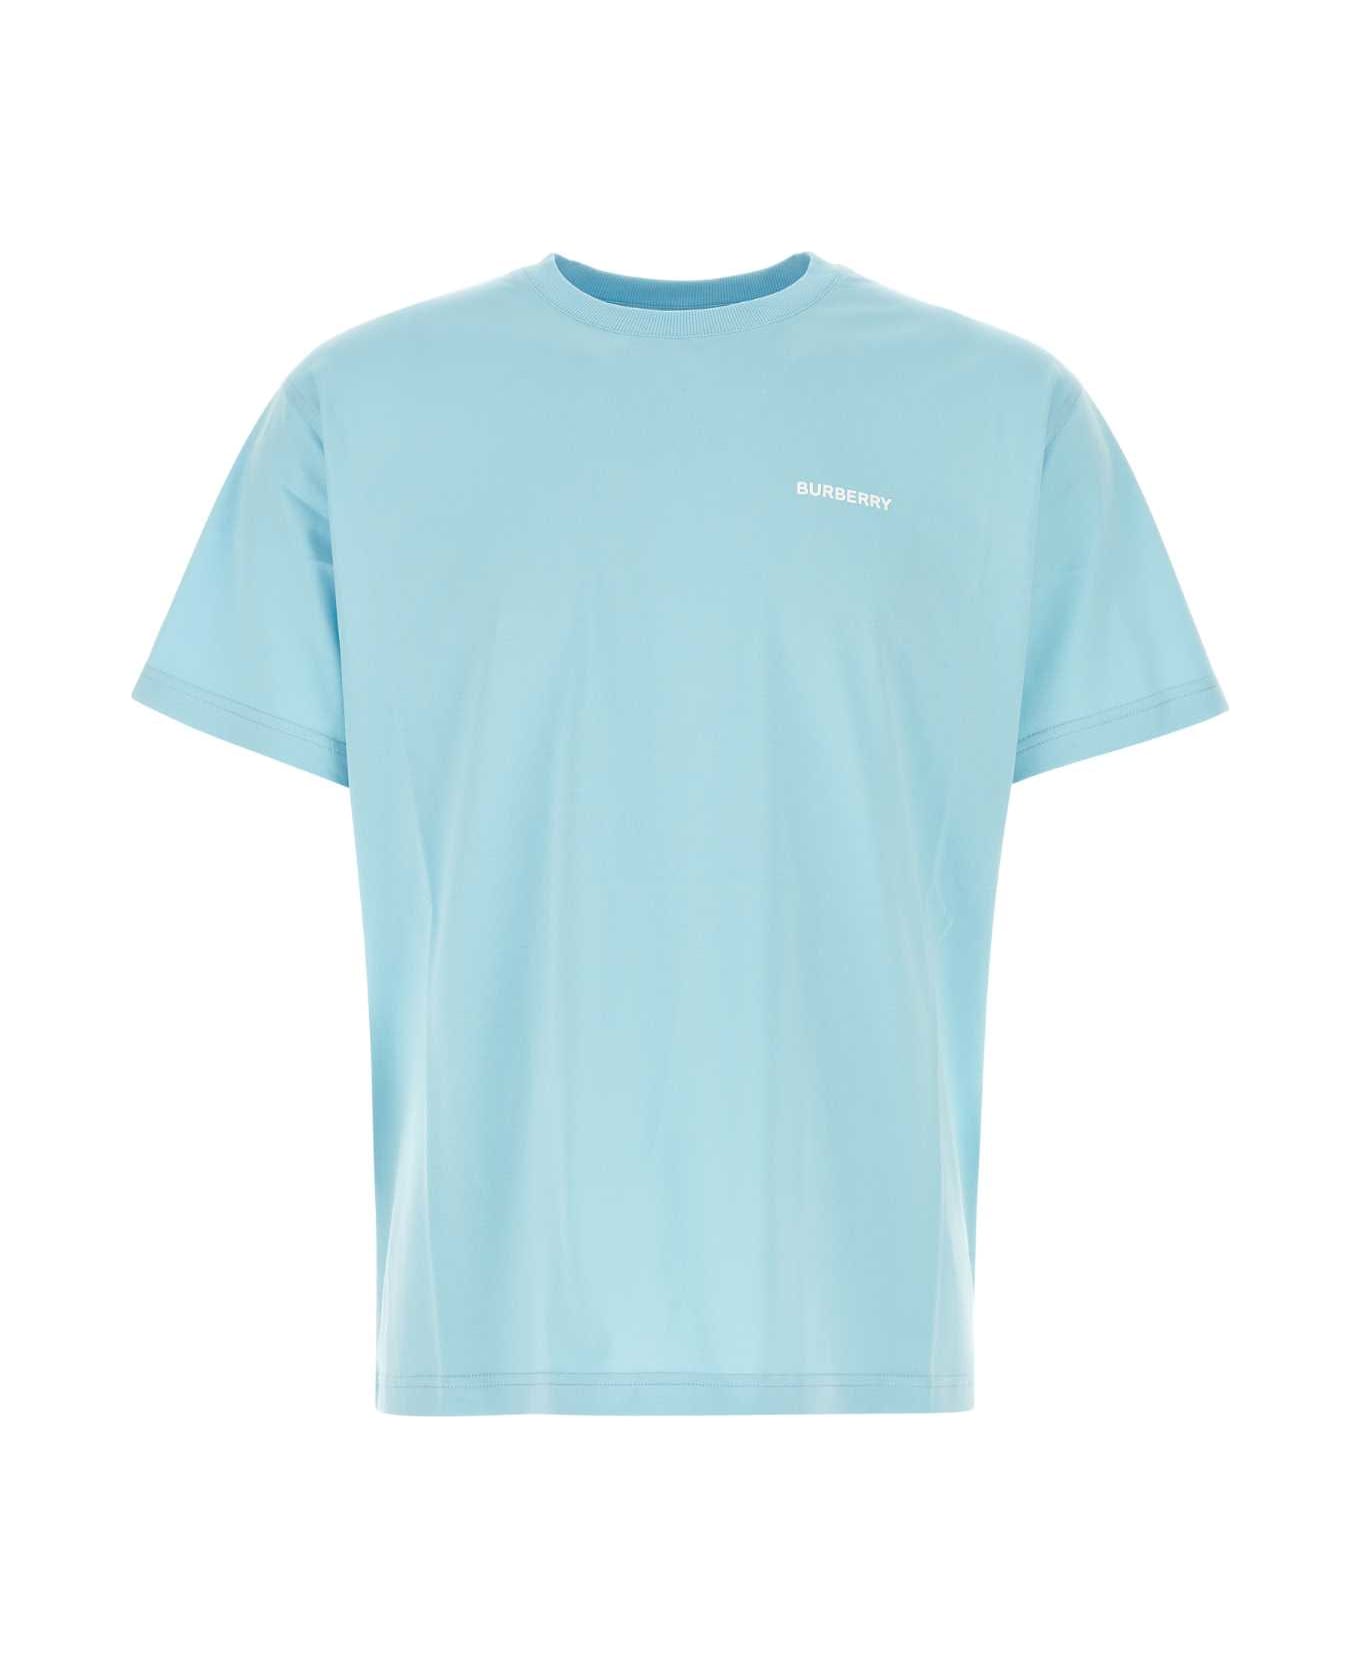 Burberry Light-blue Cotton T-shirt - BRIGHTTOPAZBLUE